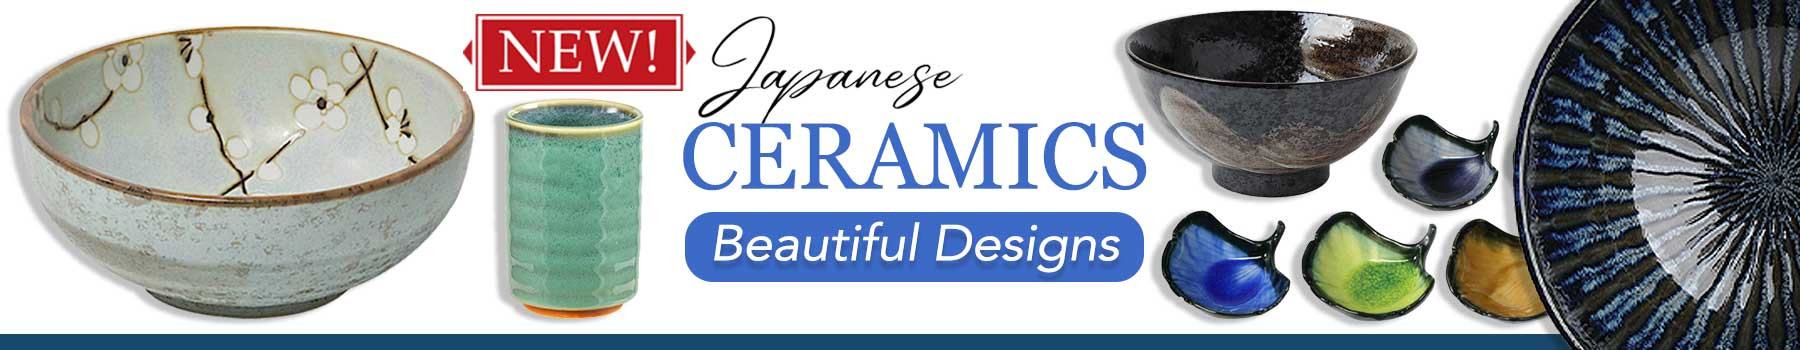 New Japanese Ceramics - Wholesale